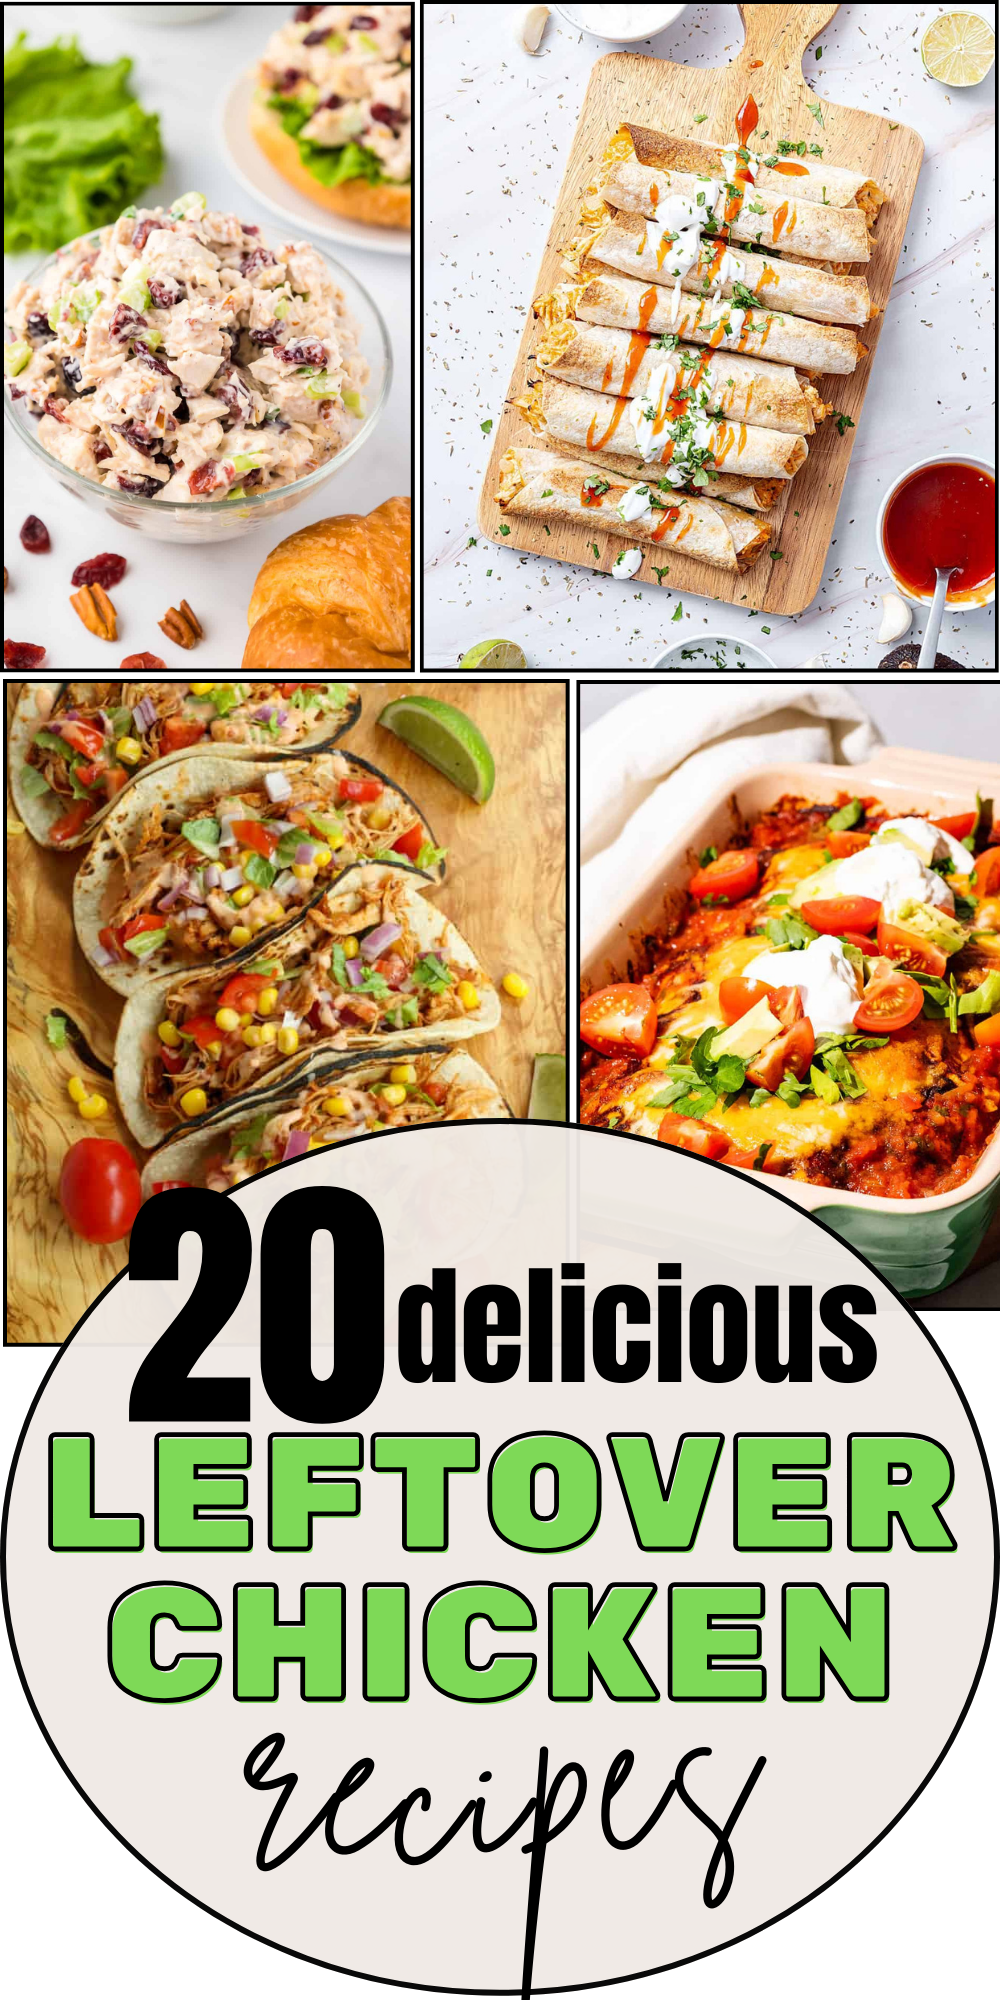 20 delicious leftover chicken recipes